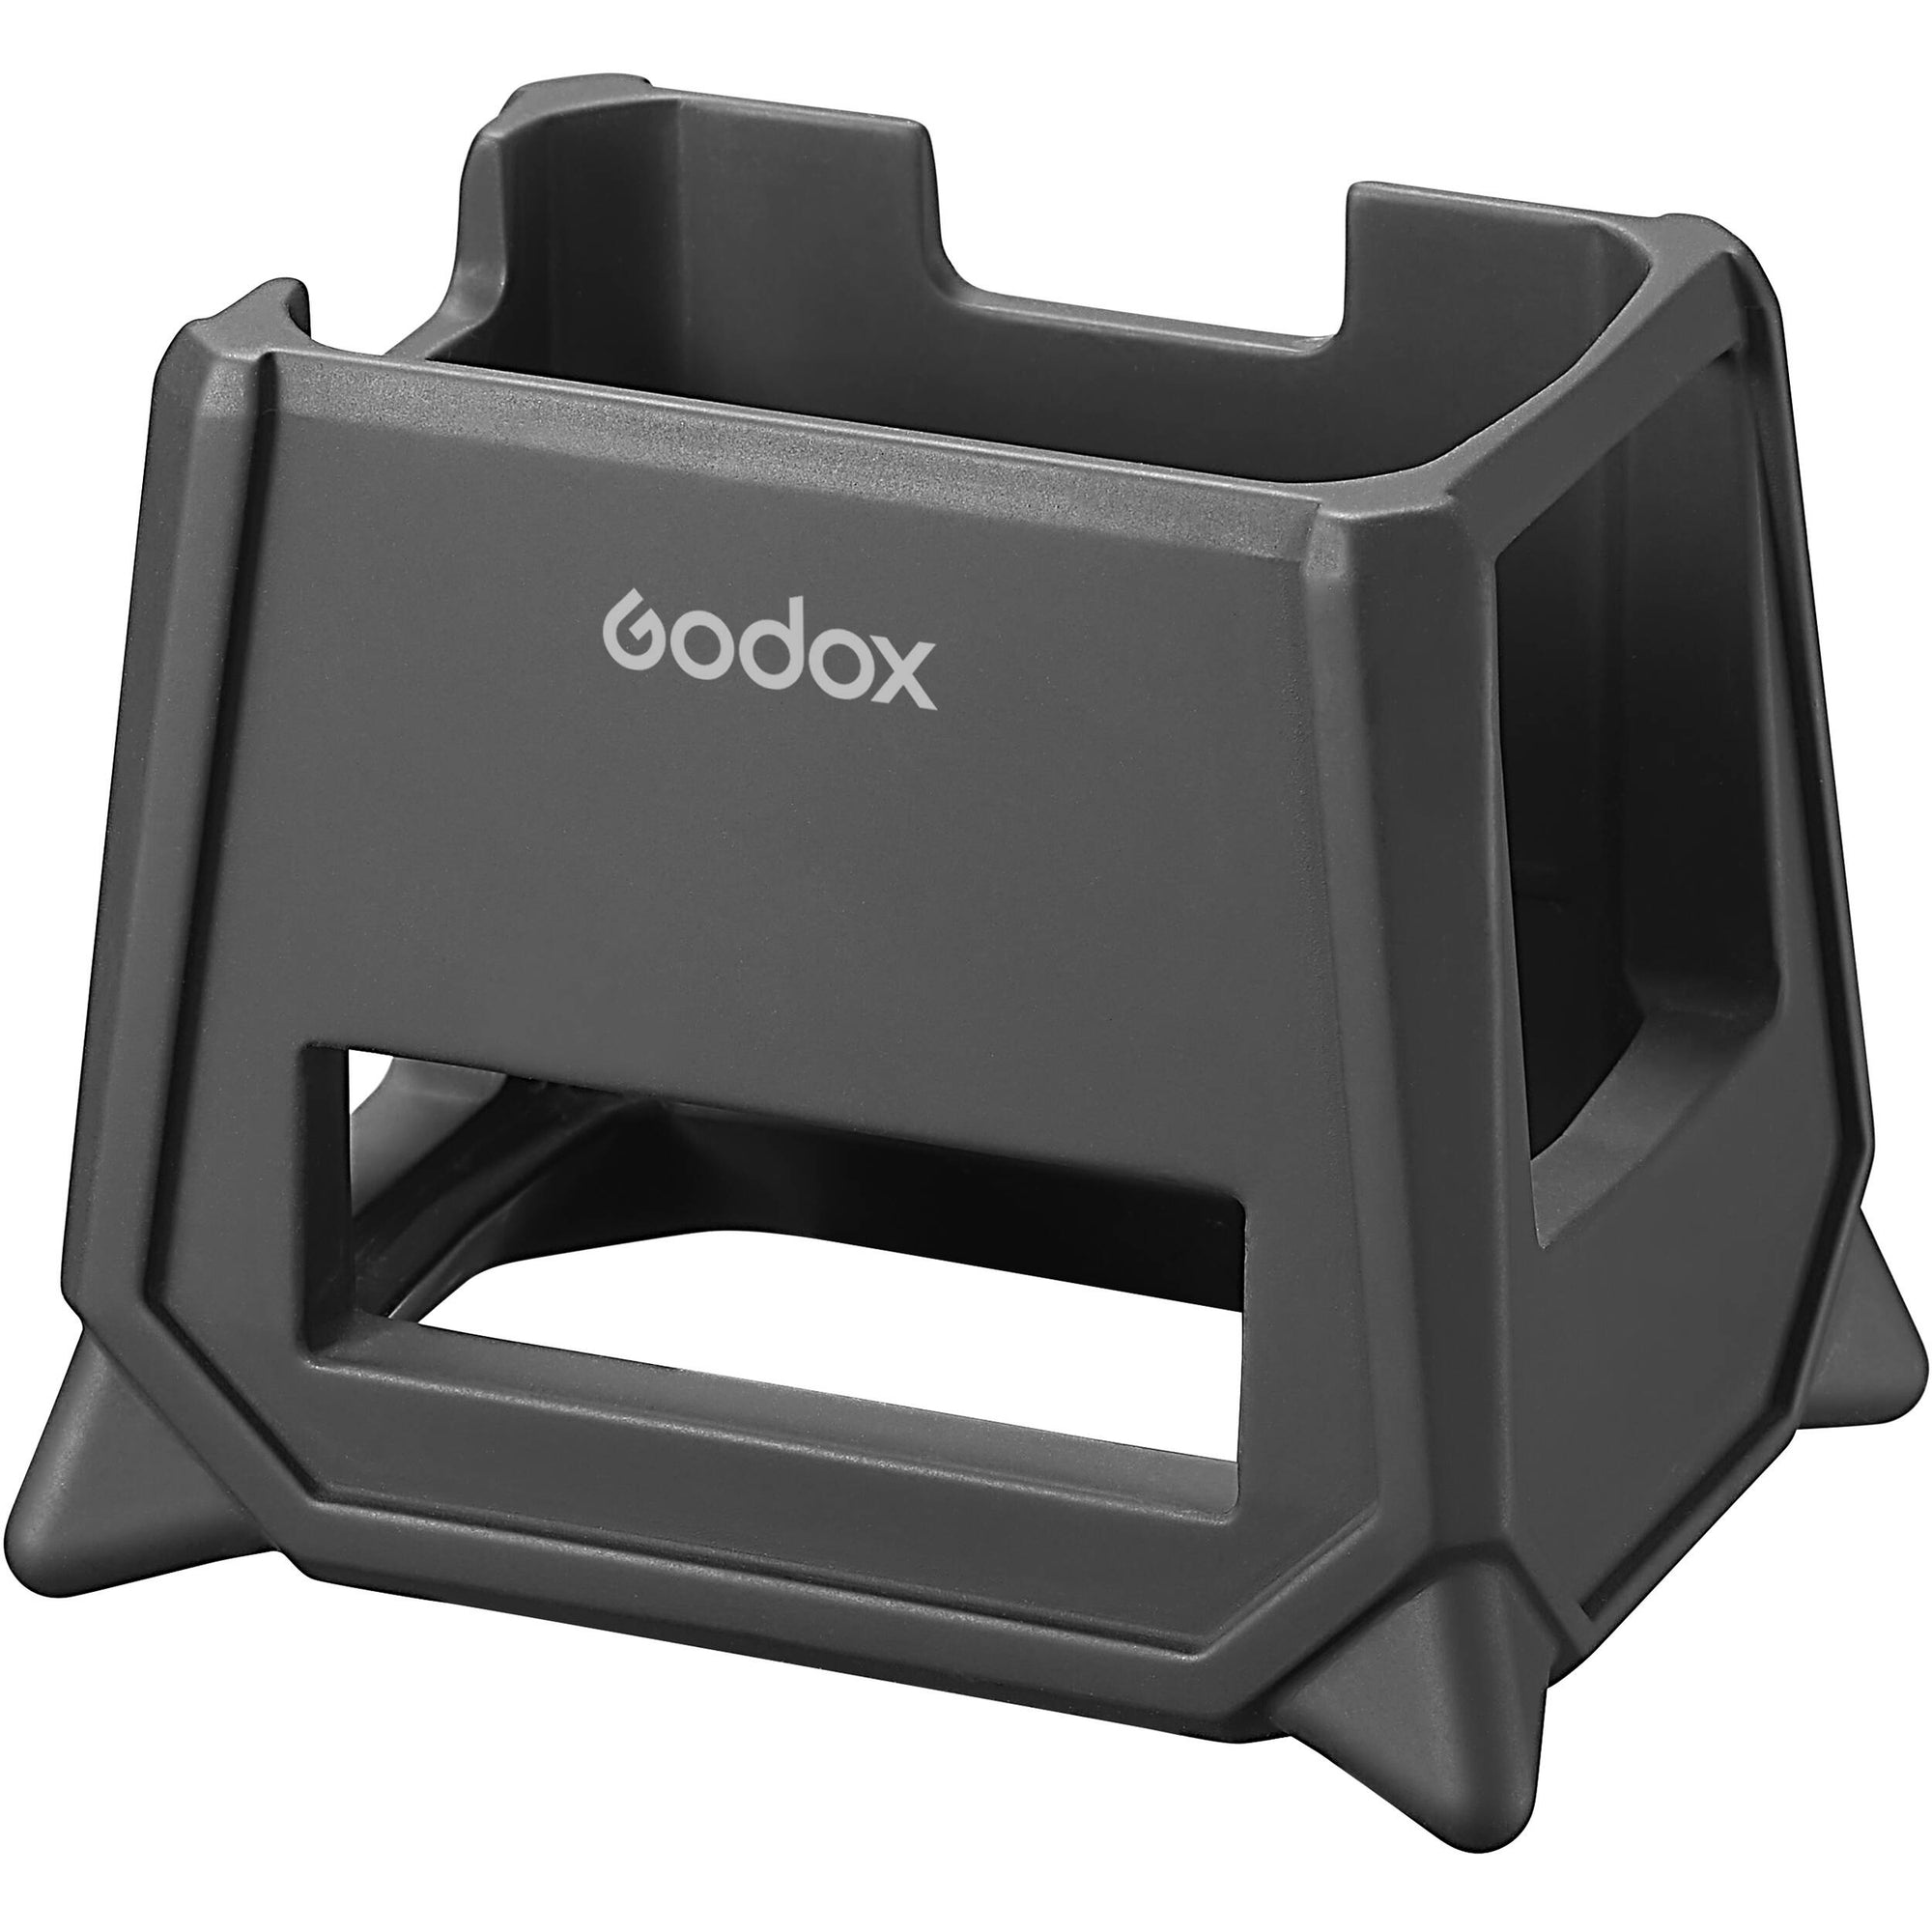 Silicone Fender for Godox AD200 Pro